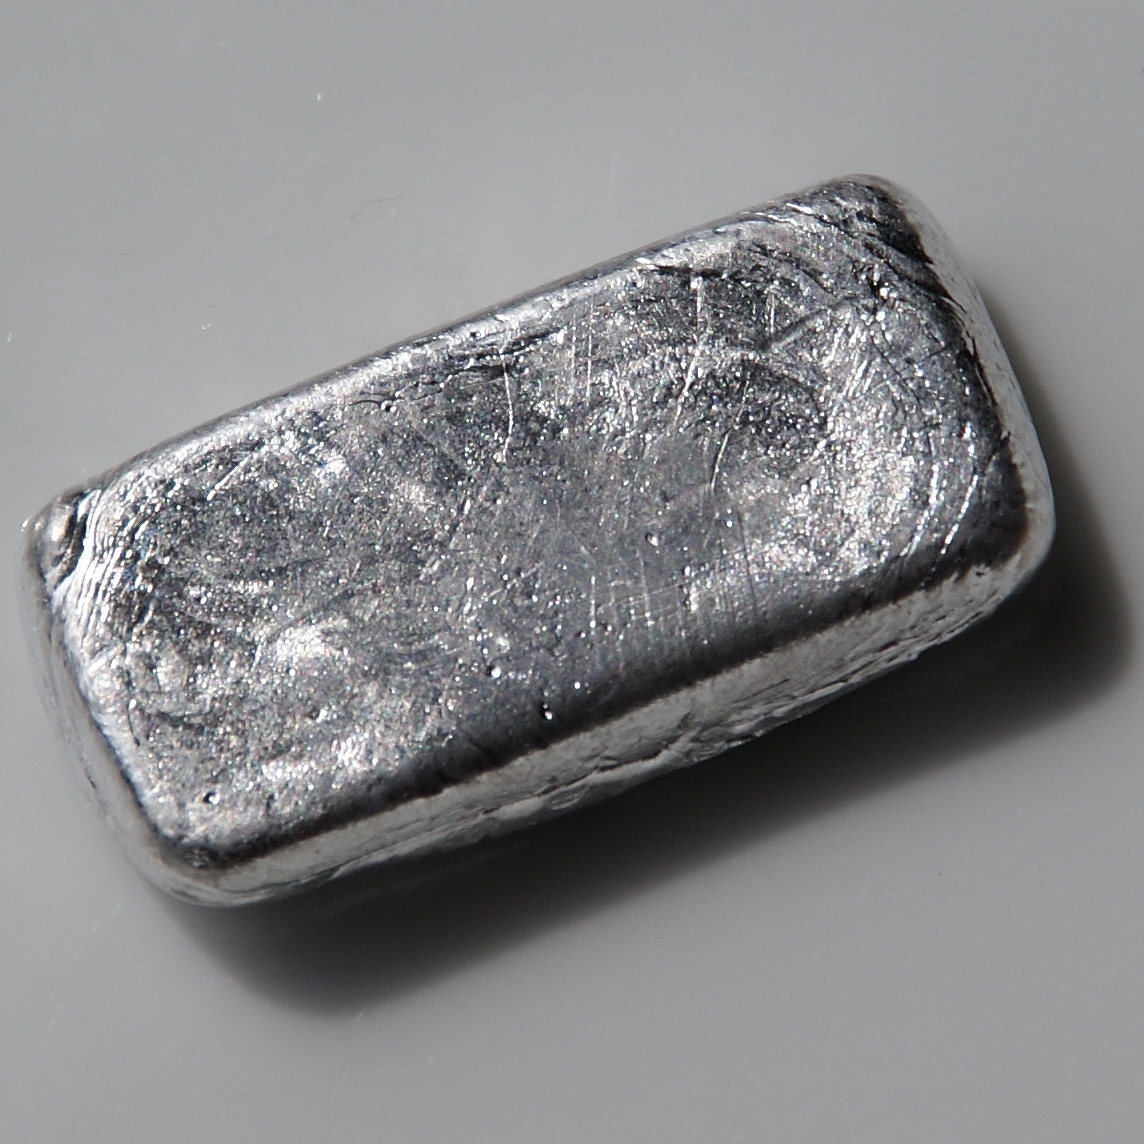 FSB MINT Details about   5 GRAMS INDIUM bar bullion ingot 5g Rare earth element metal